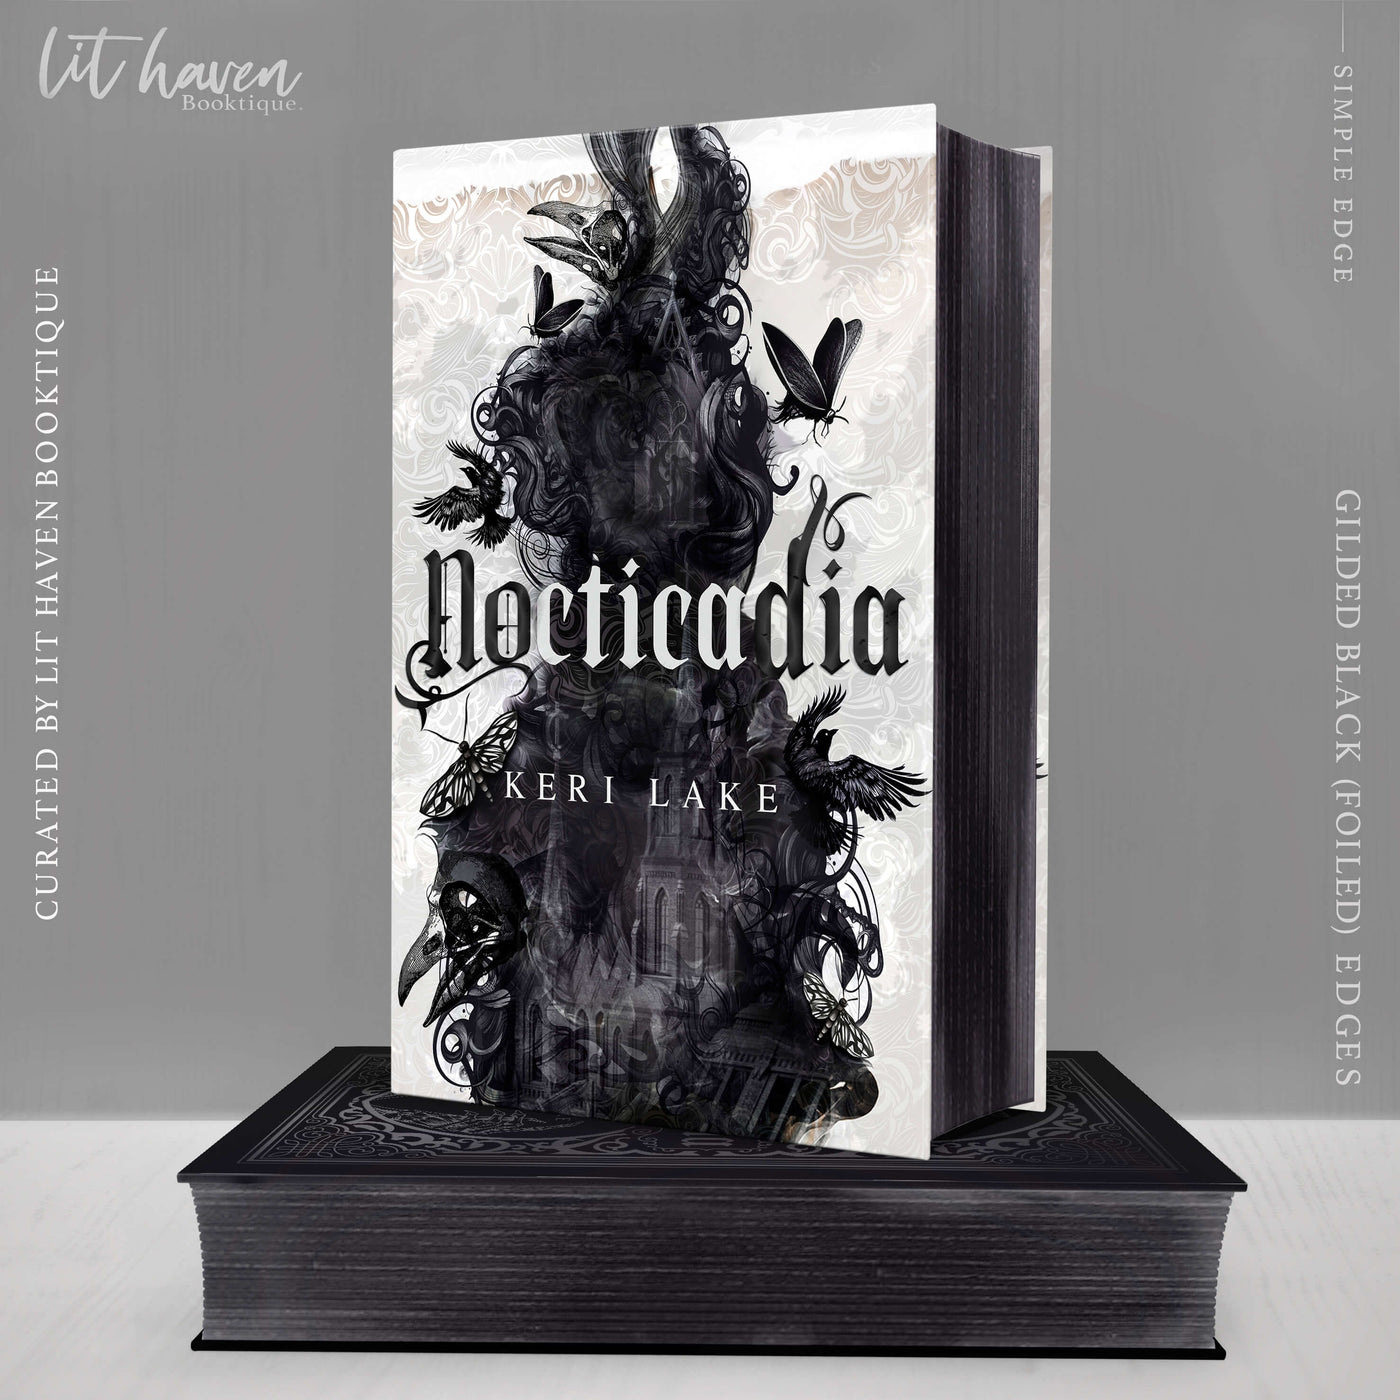 Lit Haven Booktique Book GILDED - Black Foiled Simple Edges Preorder Nocticadia Signature Edition